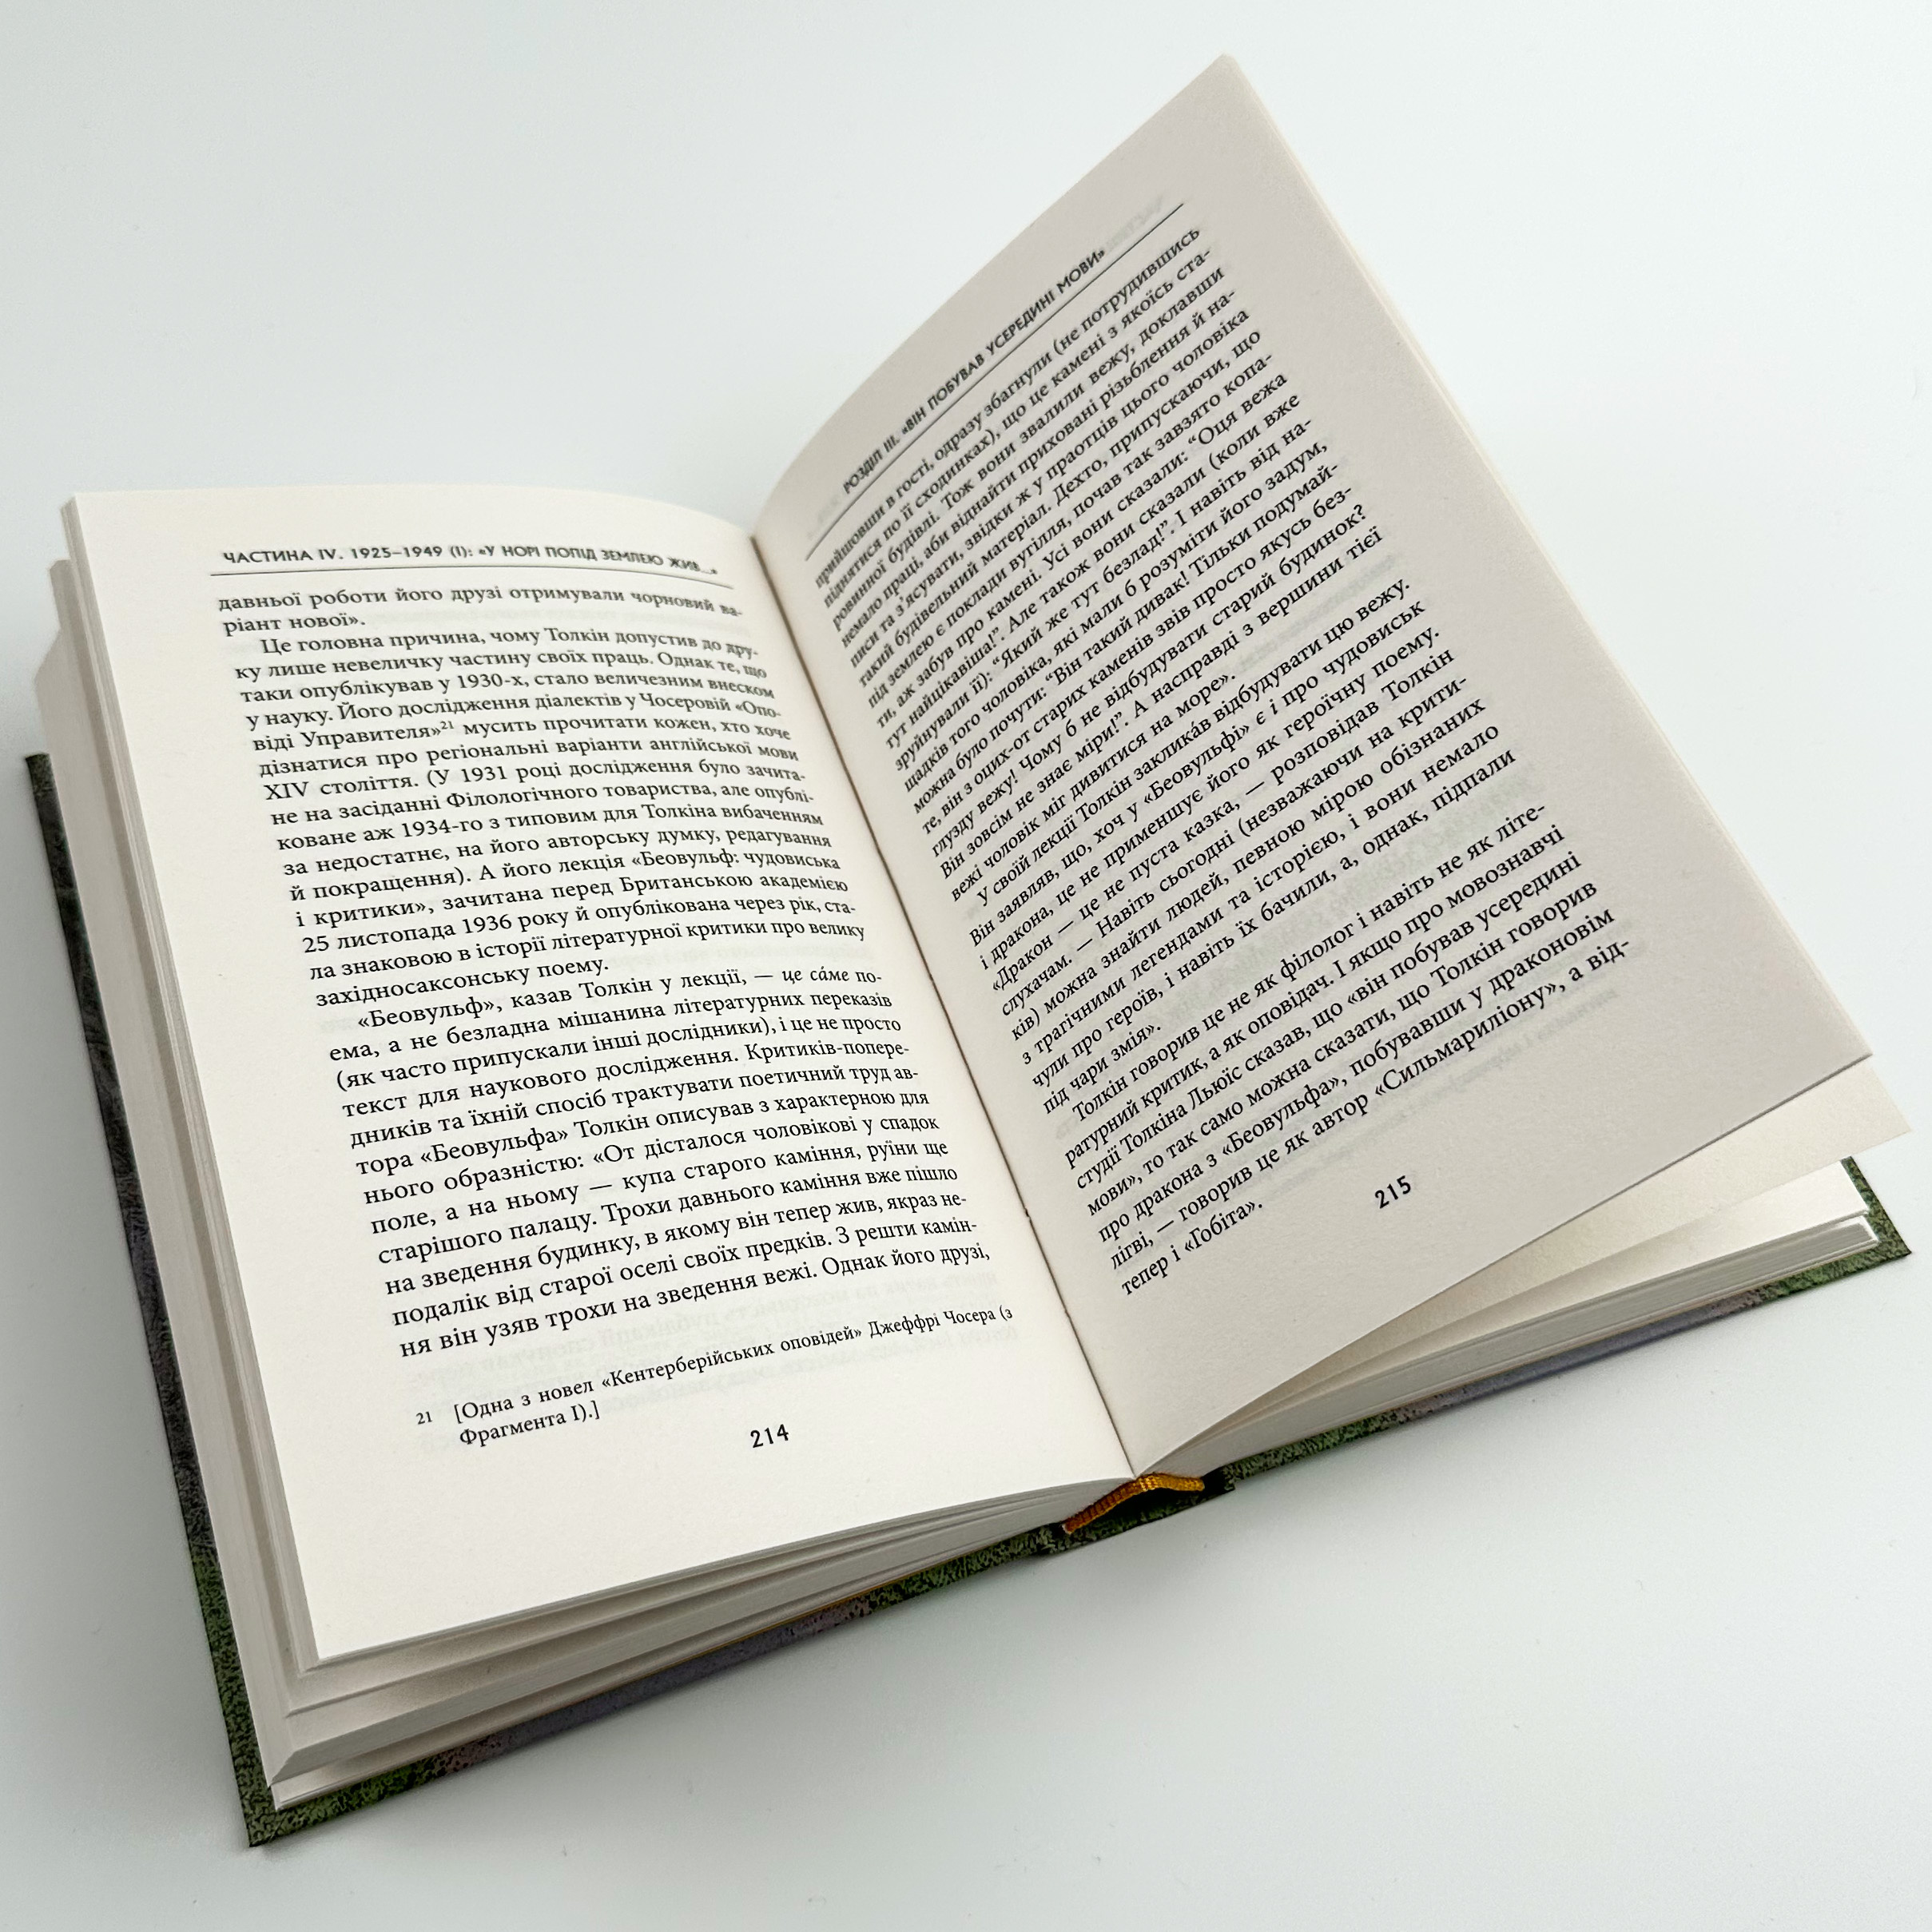 Дж. Р. Р. Толкін: Біографія  (2022 год). Автор — Гамфри Карпентер. 